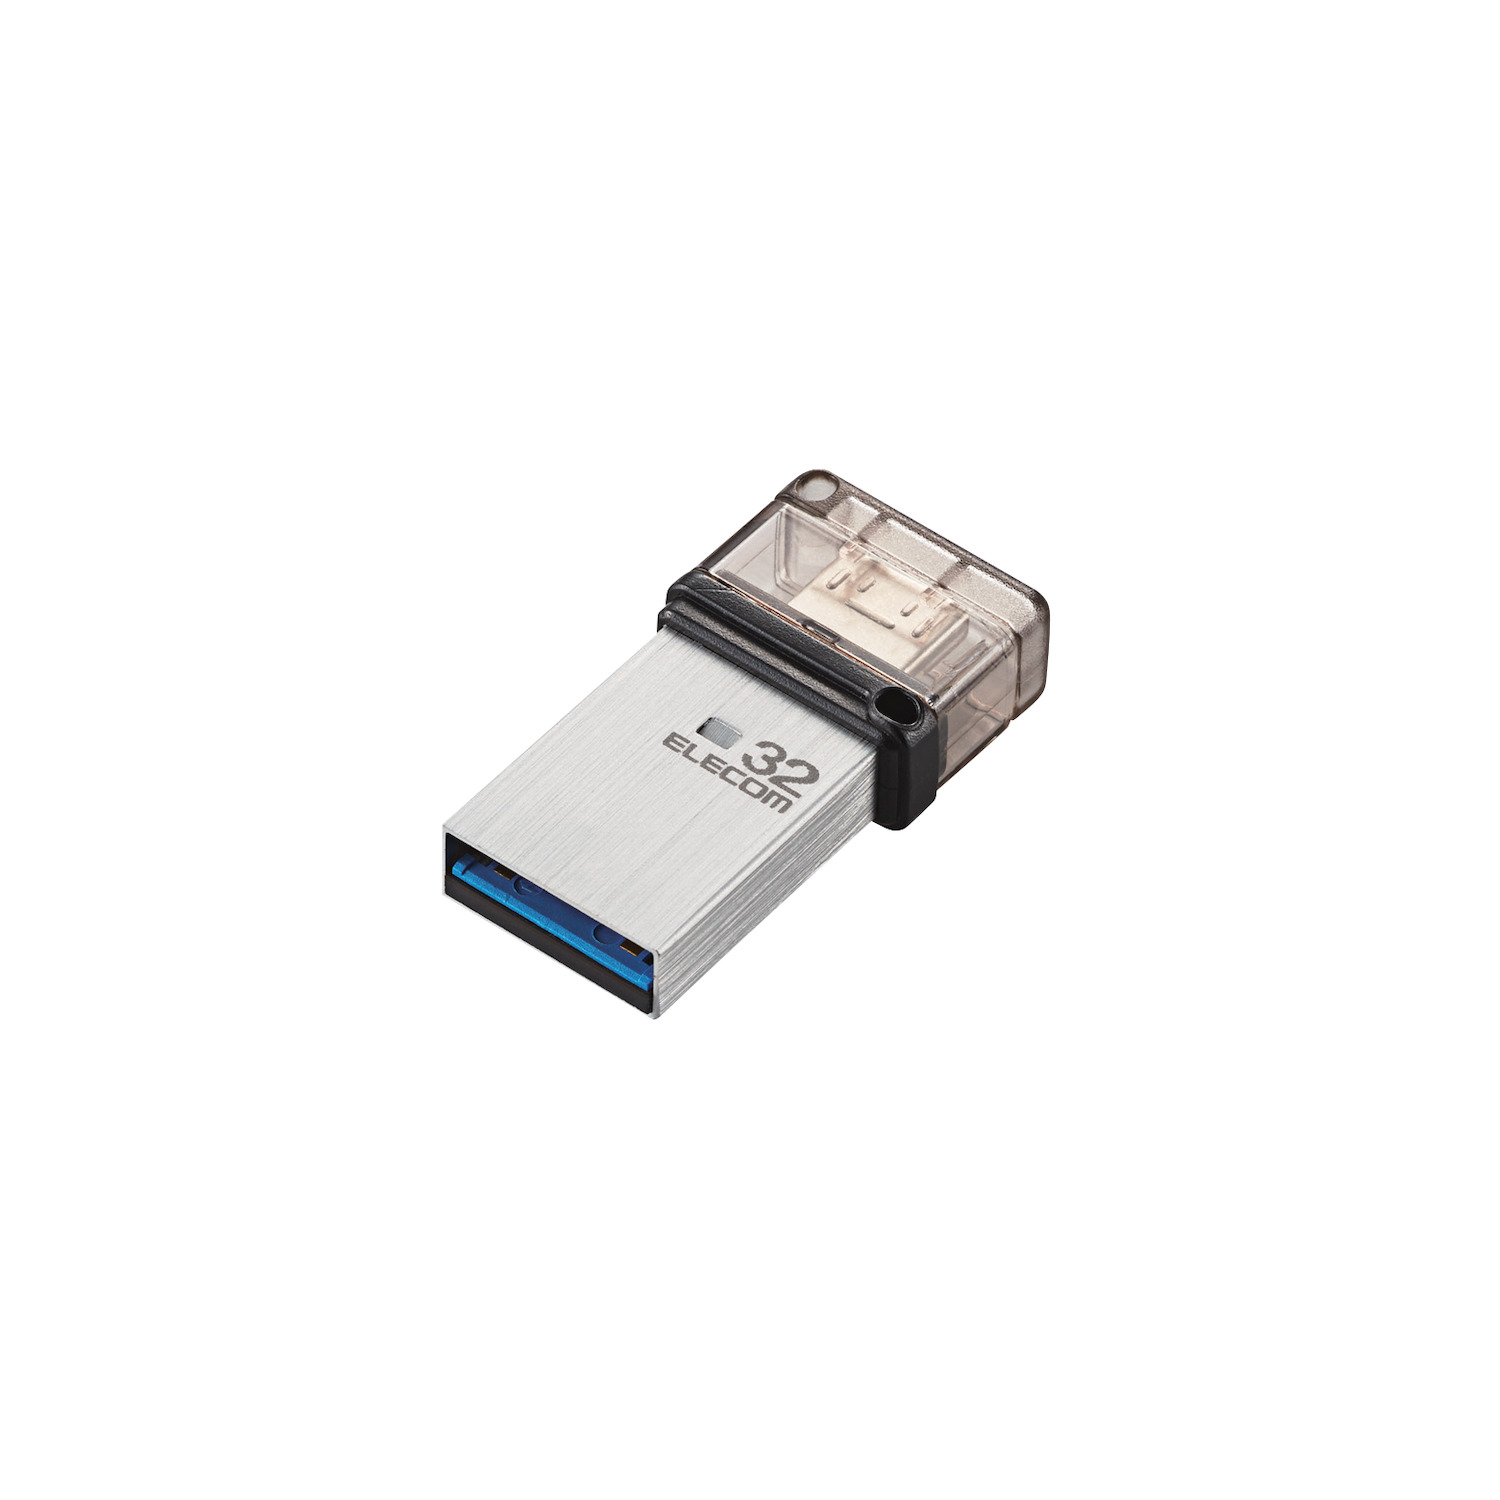 USB3.1(Gen1)対応 スマートフォン・タブレット用 OTG対応USBメモリ シルバー 32GB  MF-SEU3032GSV｜宇佐美鉱油の総合通販サイトうさマート